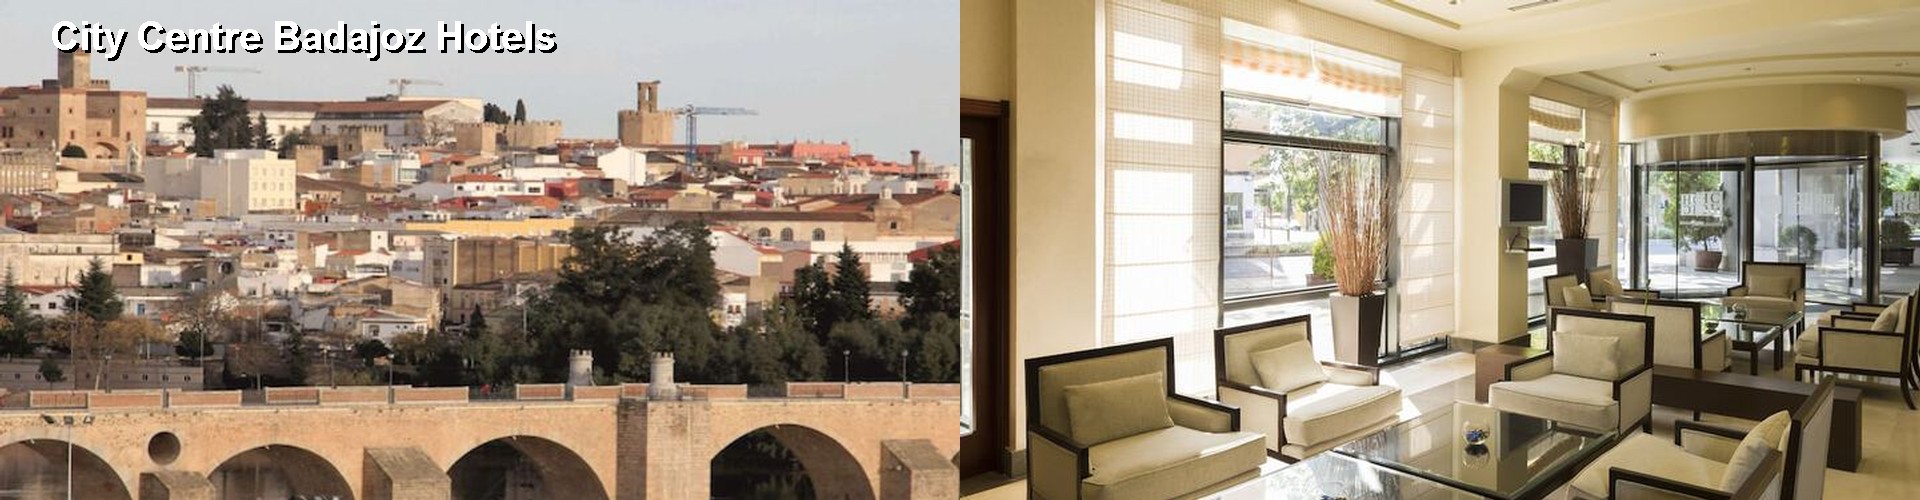 5 Best Hotels near City Centre Badajoz